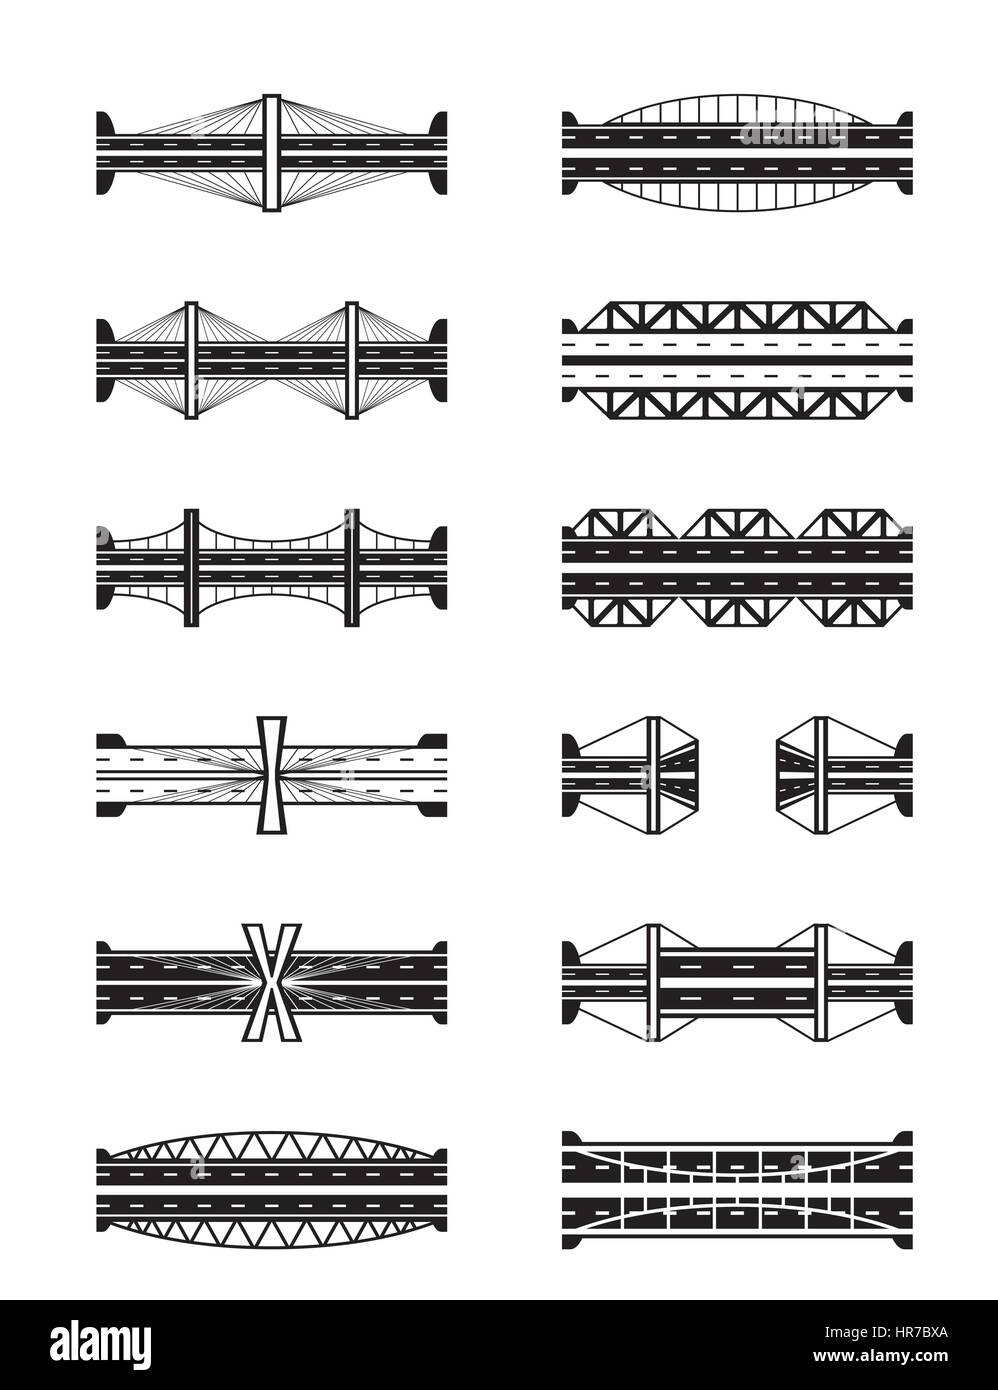 Vari tipi di ponti visto dal di sopra - illustrazione vettoriale Illustrazione Vettoriale